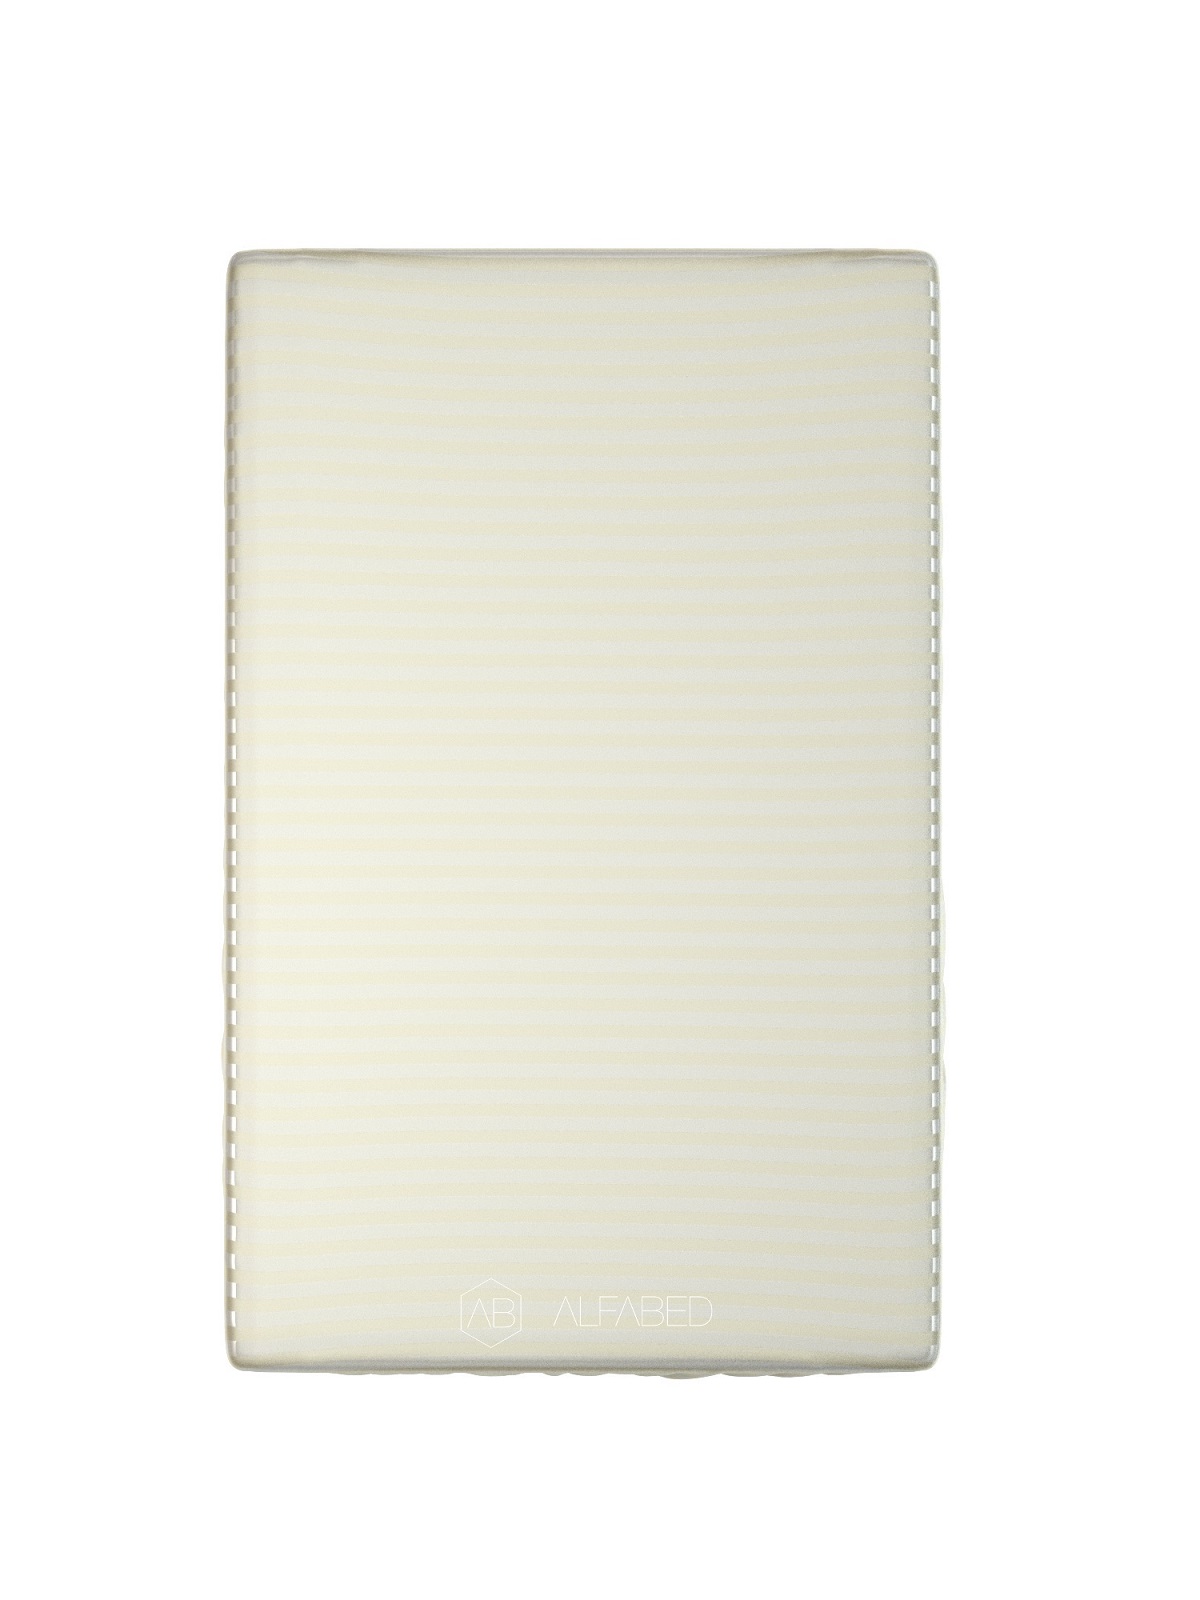 Pillow Top Fitted Sheet Premium Woven Cotton Sateen Stripe Cream H H-51